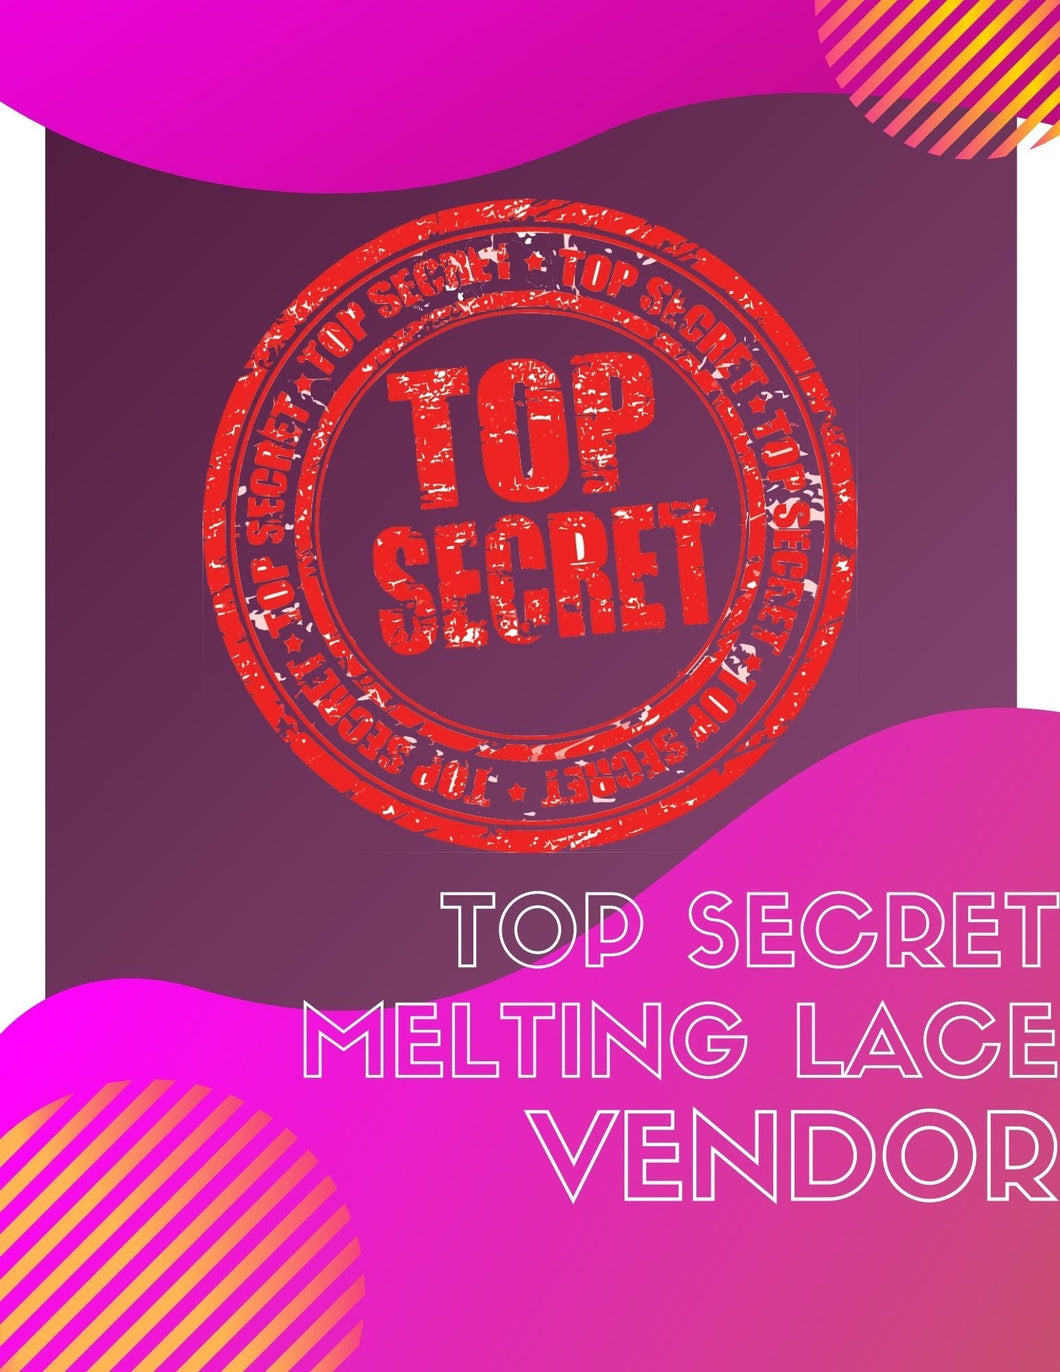 Top secret waterproof lace glue & products vendor